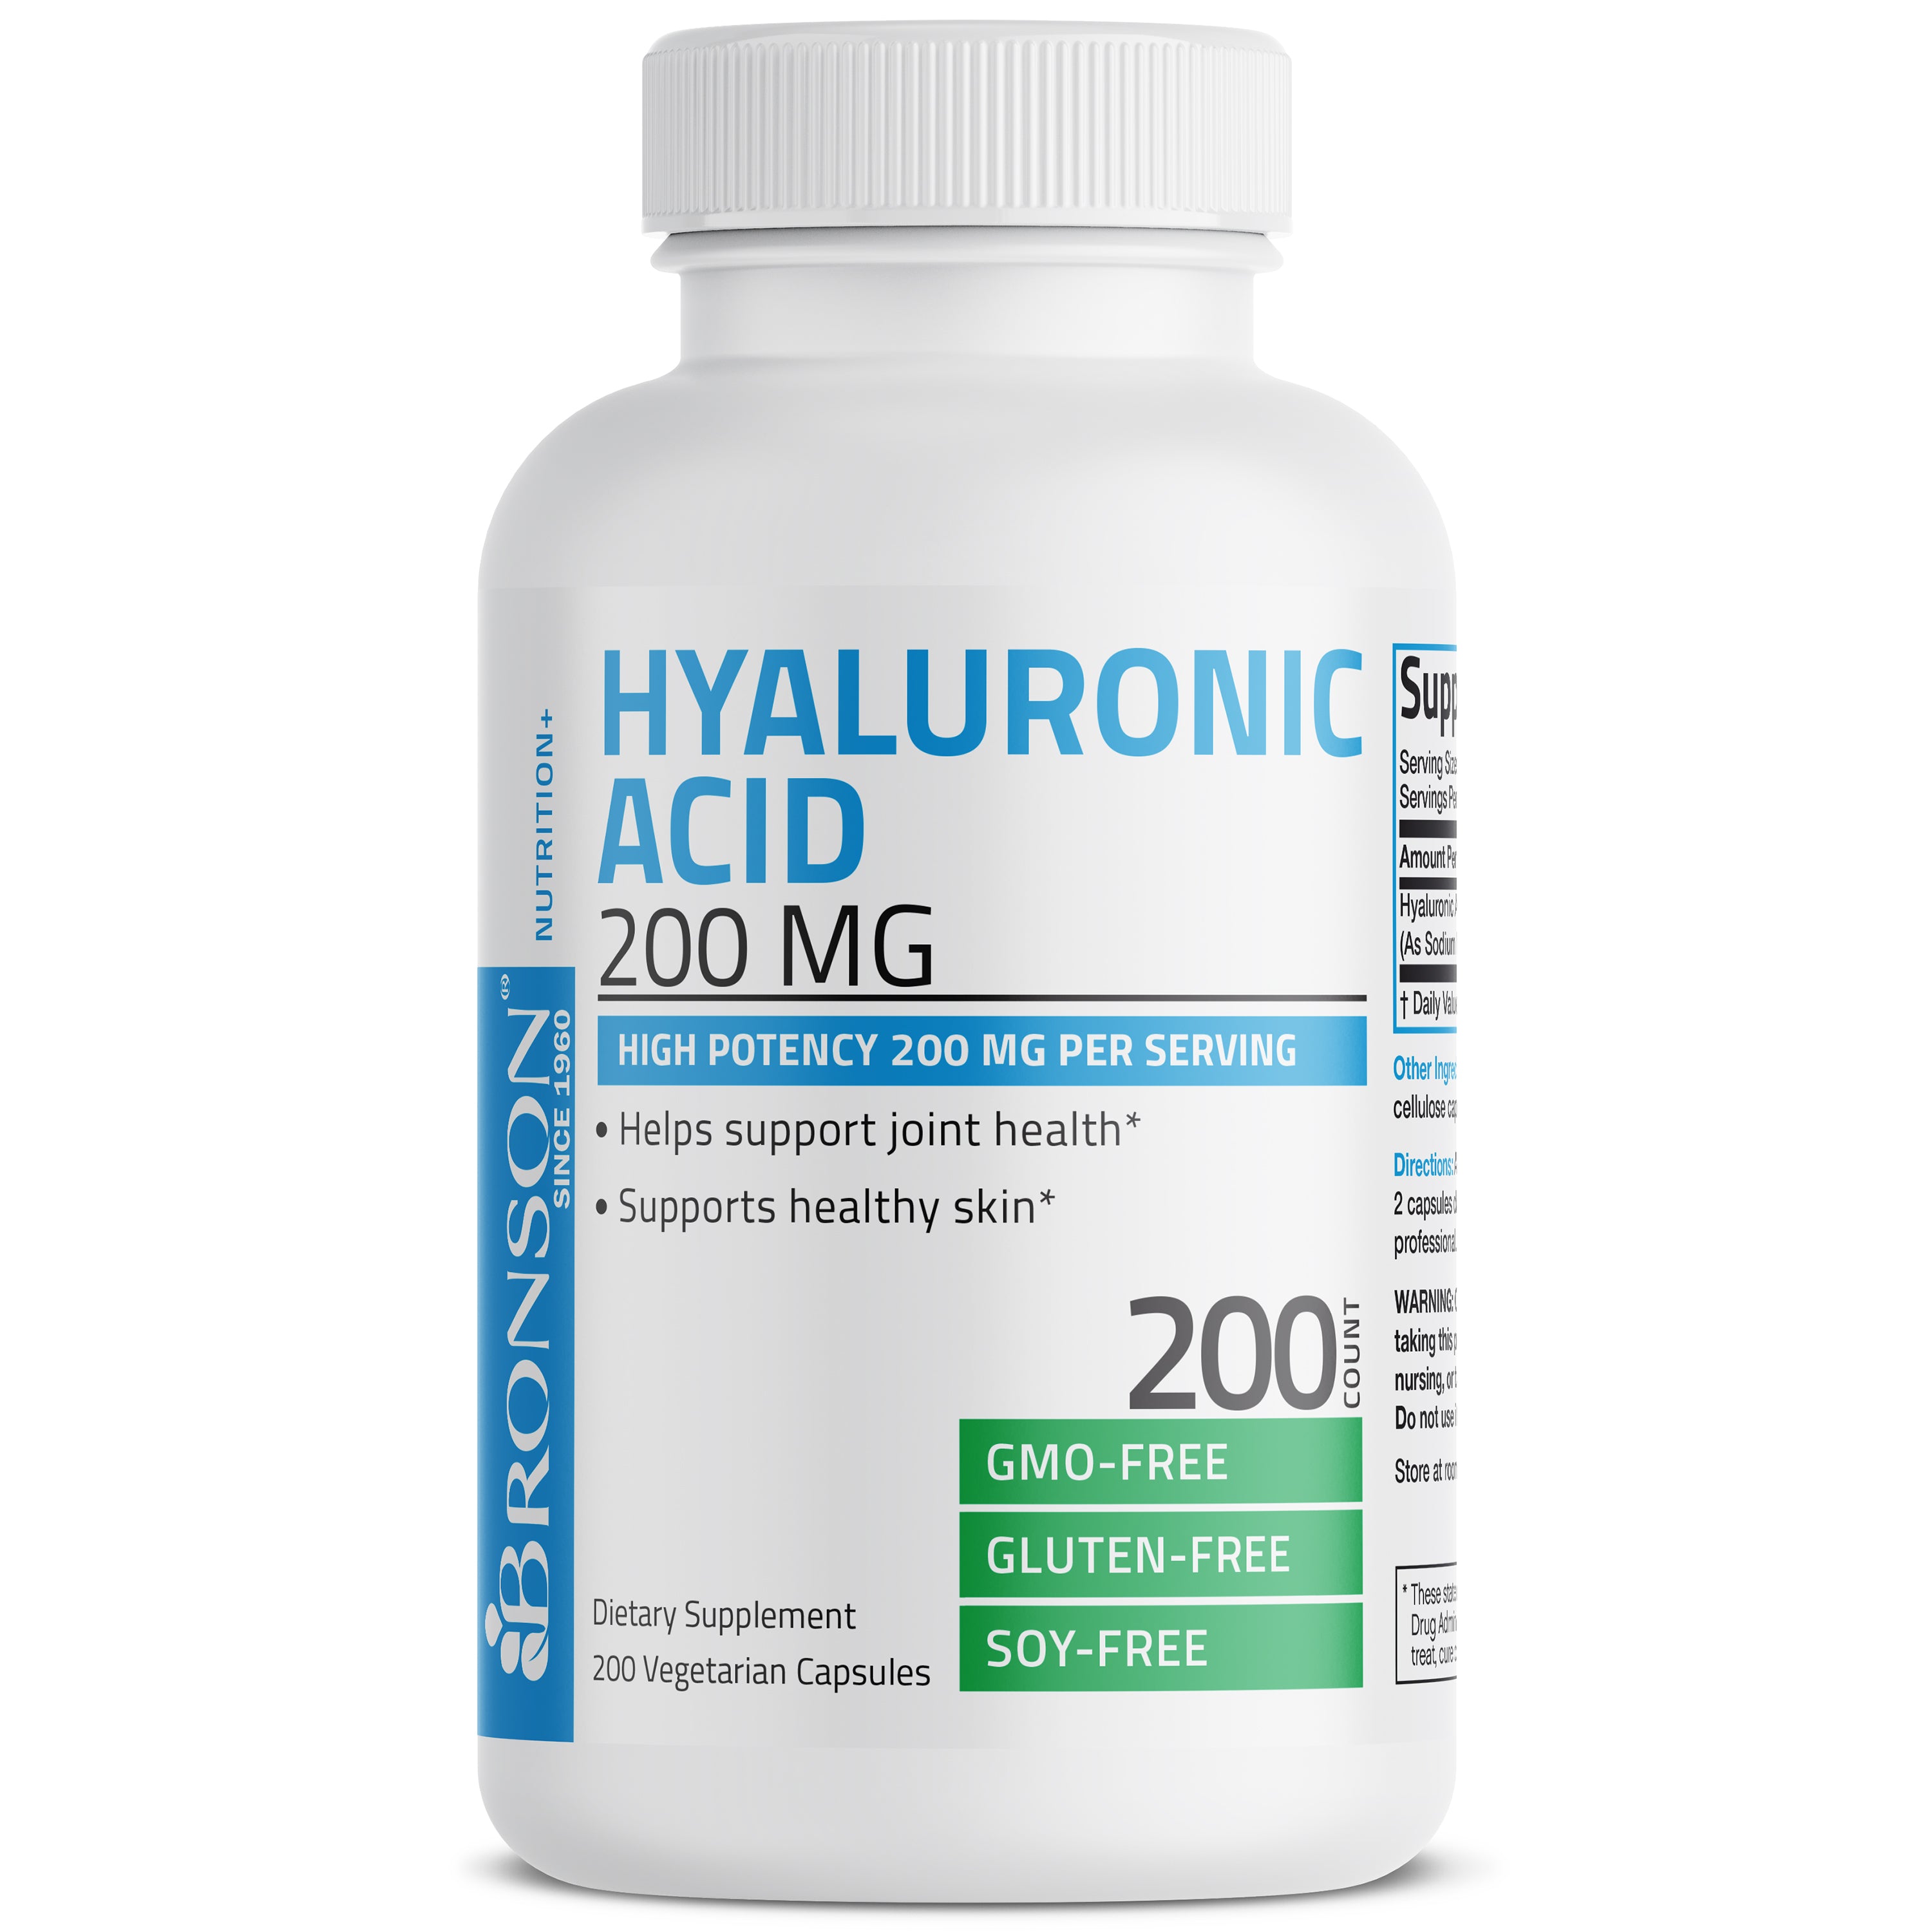 Hyaluronic Acid 200 MG, 200 Vegetarian Capsules view 3 of 6